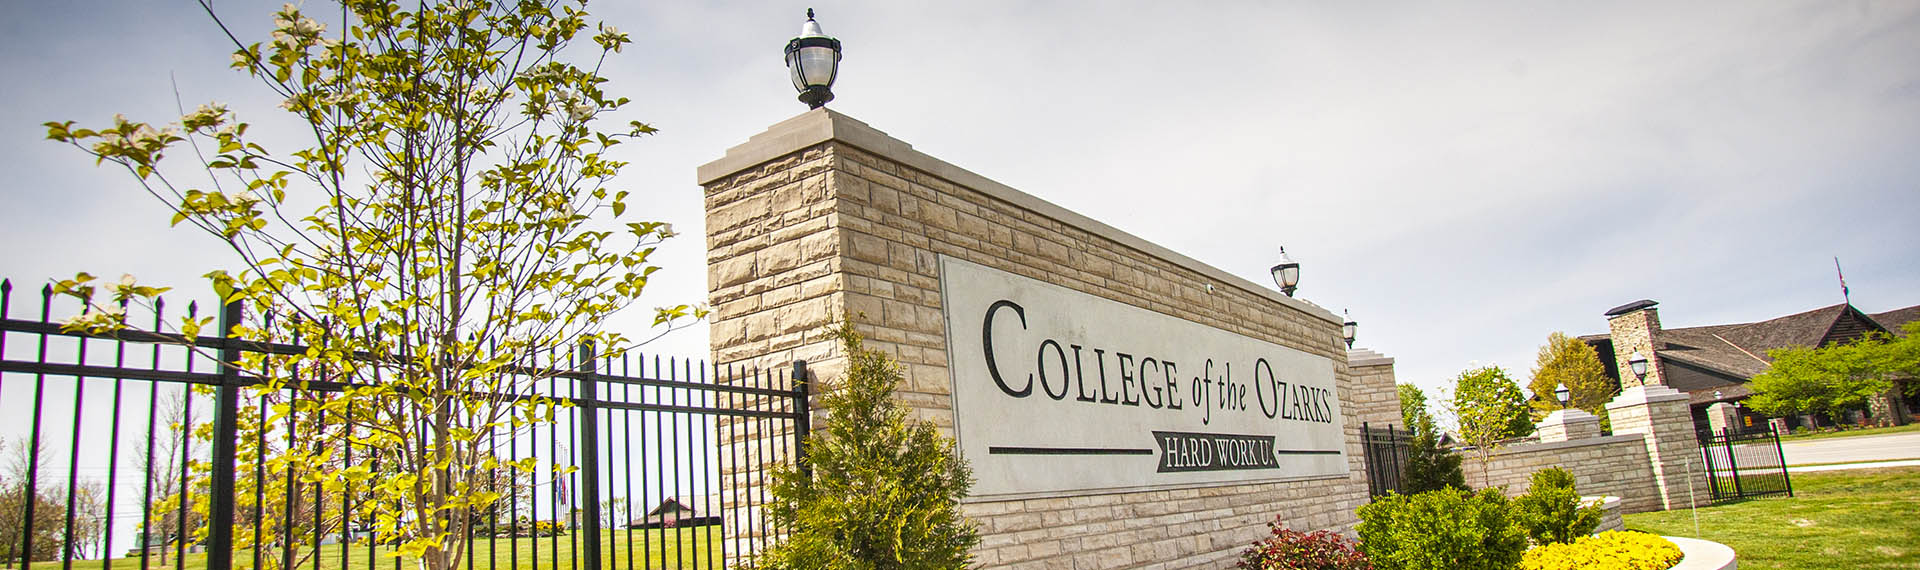 College of the Ozarks Entrance